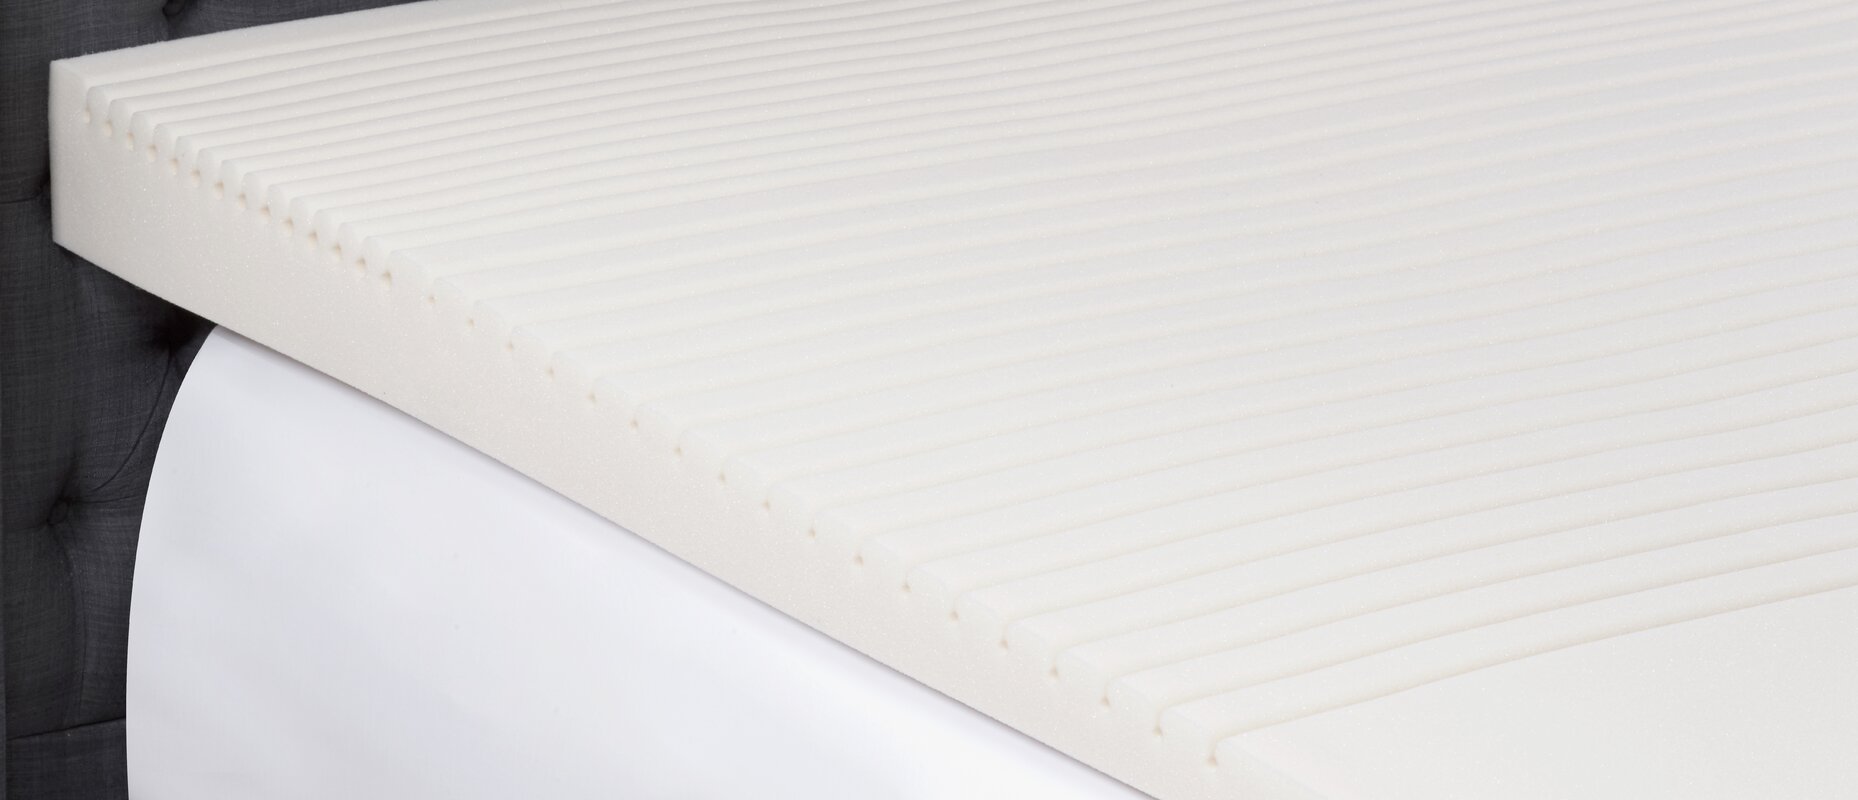 incline foam mattress topper support